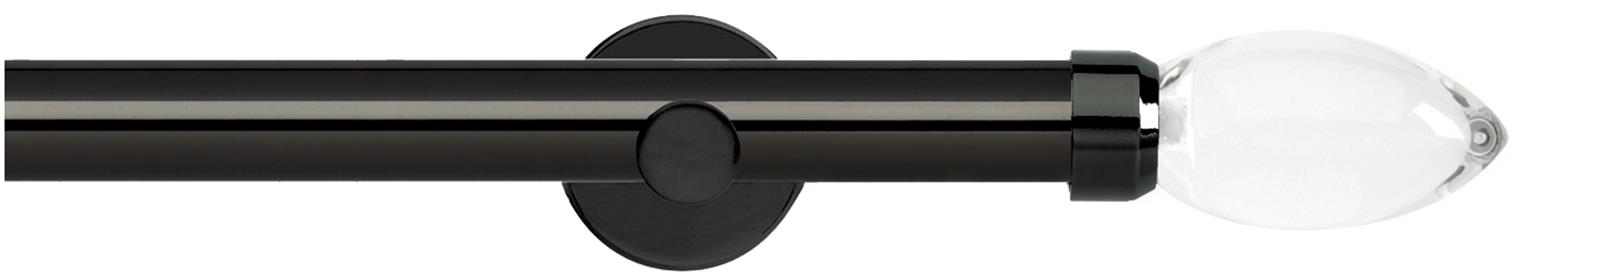 Neo Premium 28mm Eyelet Pole Black Nickel Cylinder Clear Teardrop